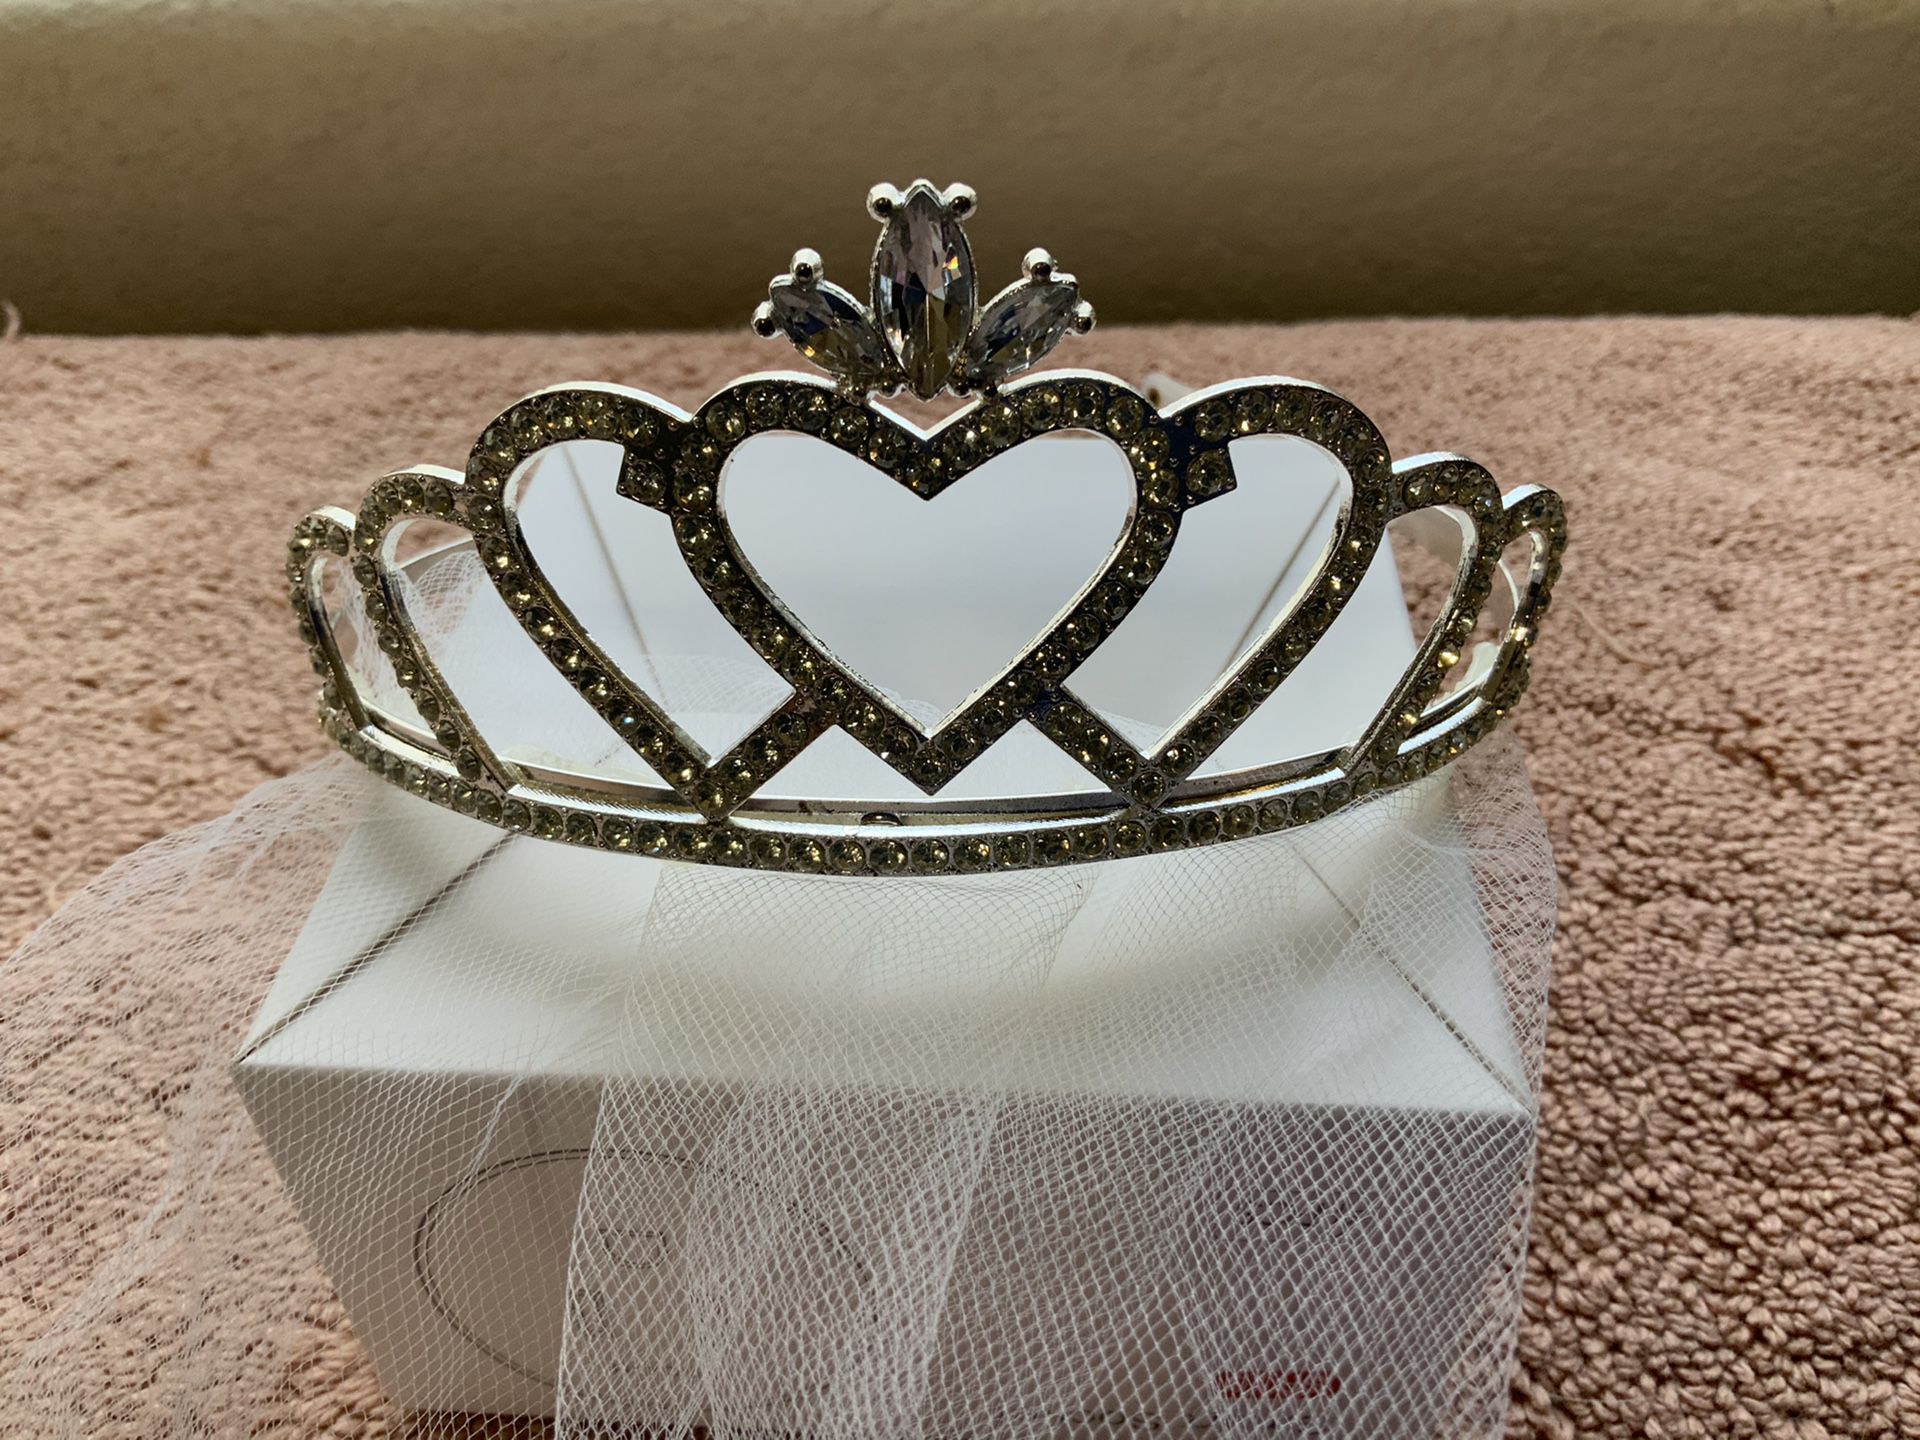 NEW Stunning HEART Formal Silvertone Rhinestone Crown Tiara with Veil